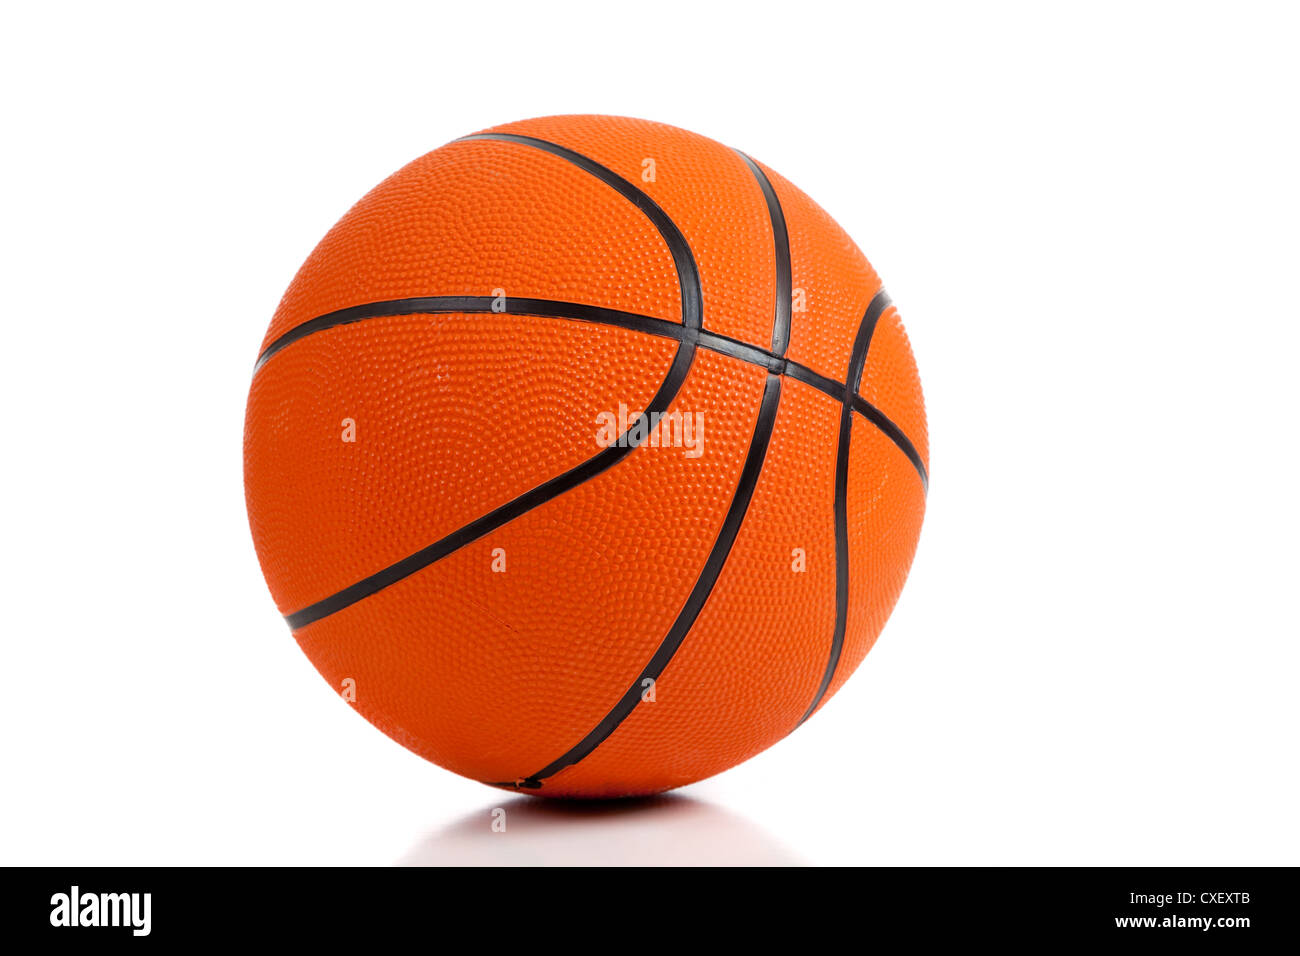 Basketball on a white background Stock Photo